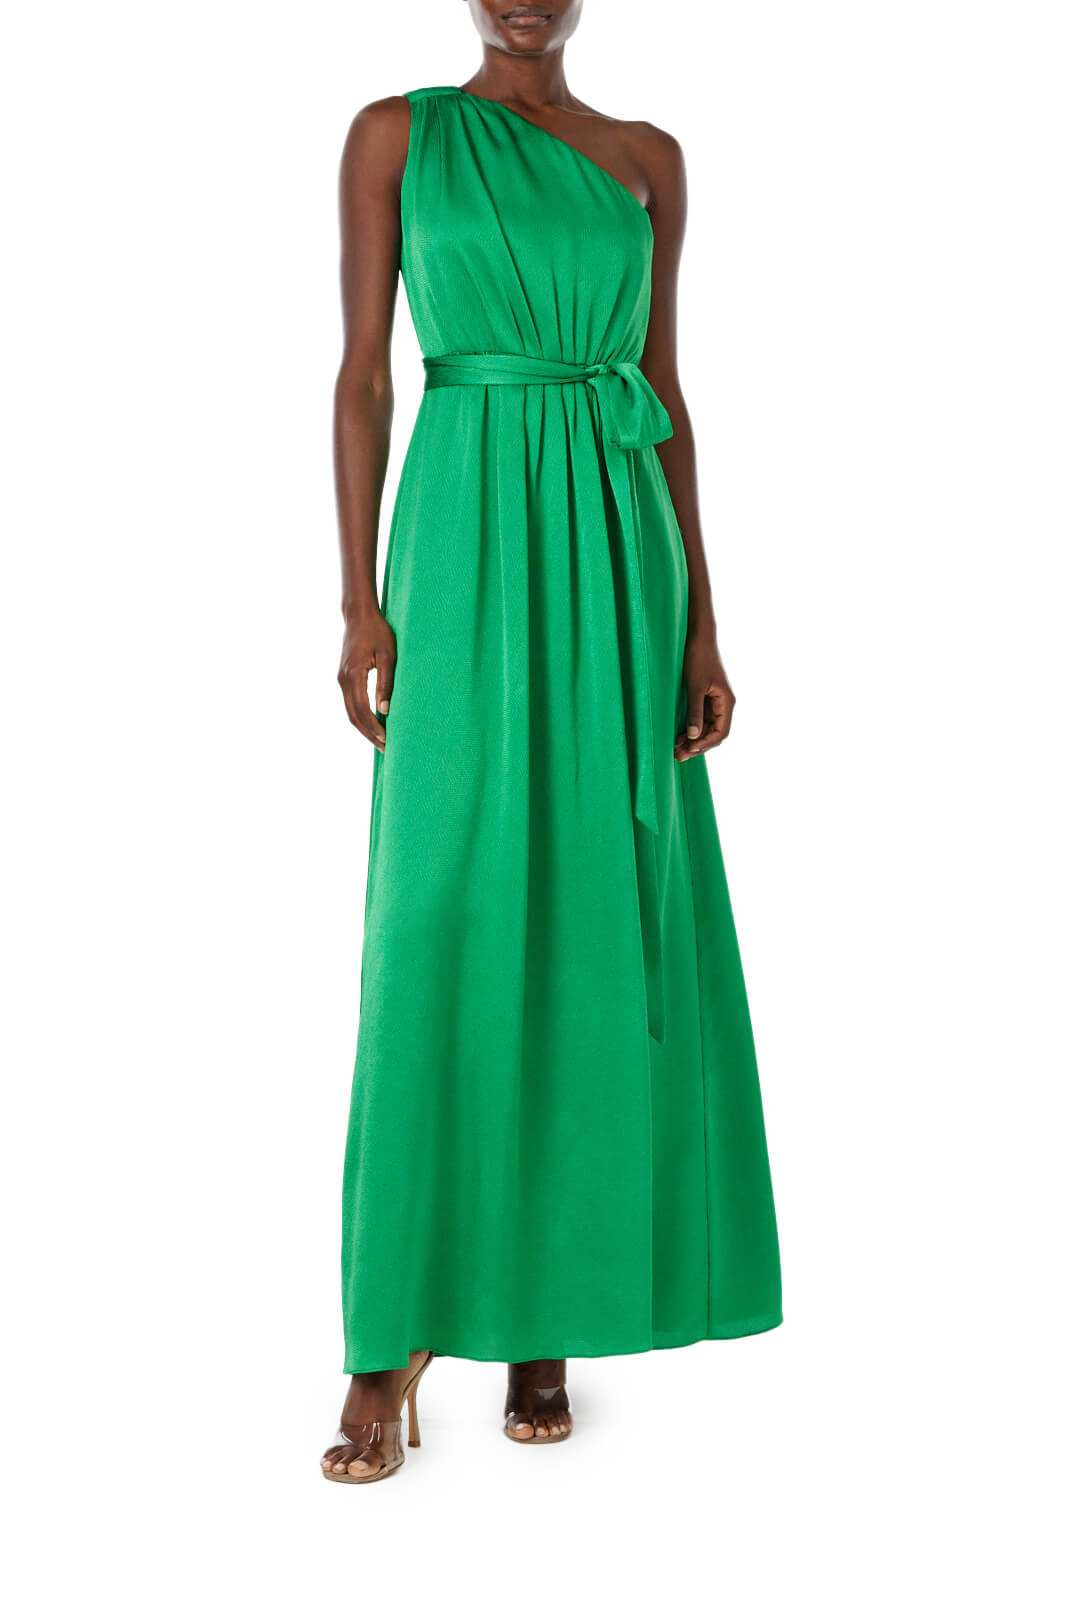 ML Monique Lhuillier green one shoulder long dress with high front slit.